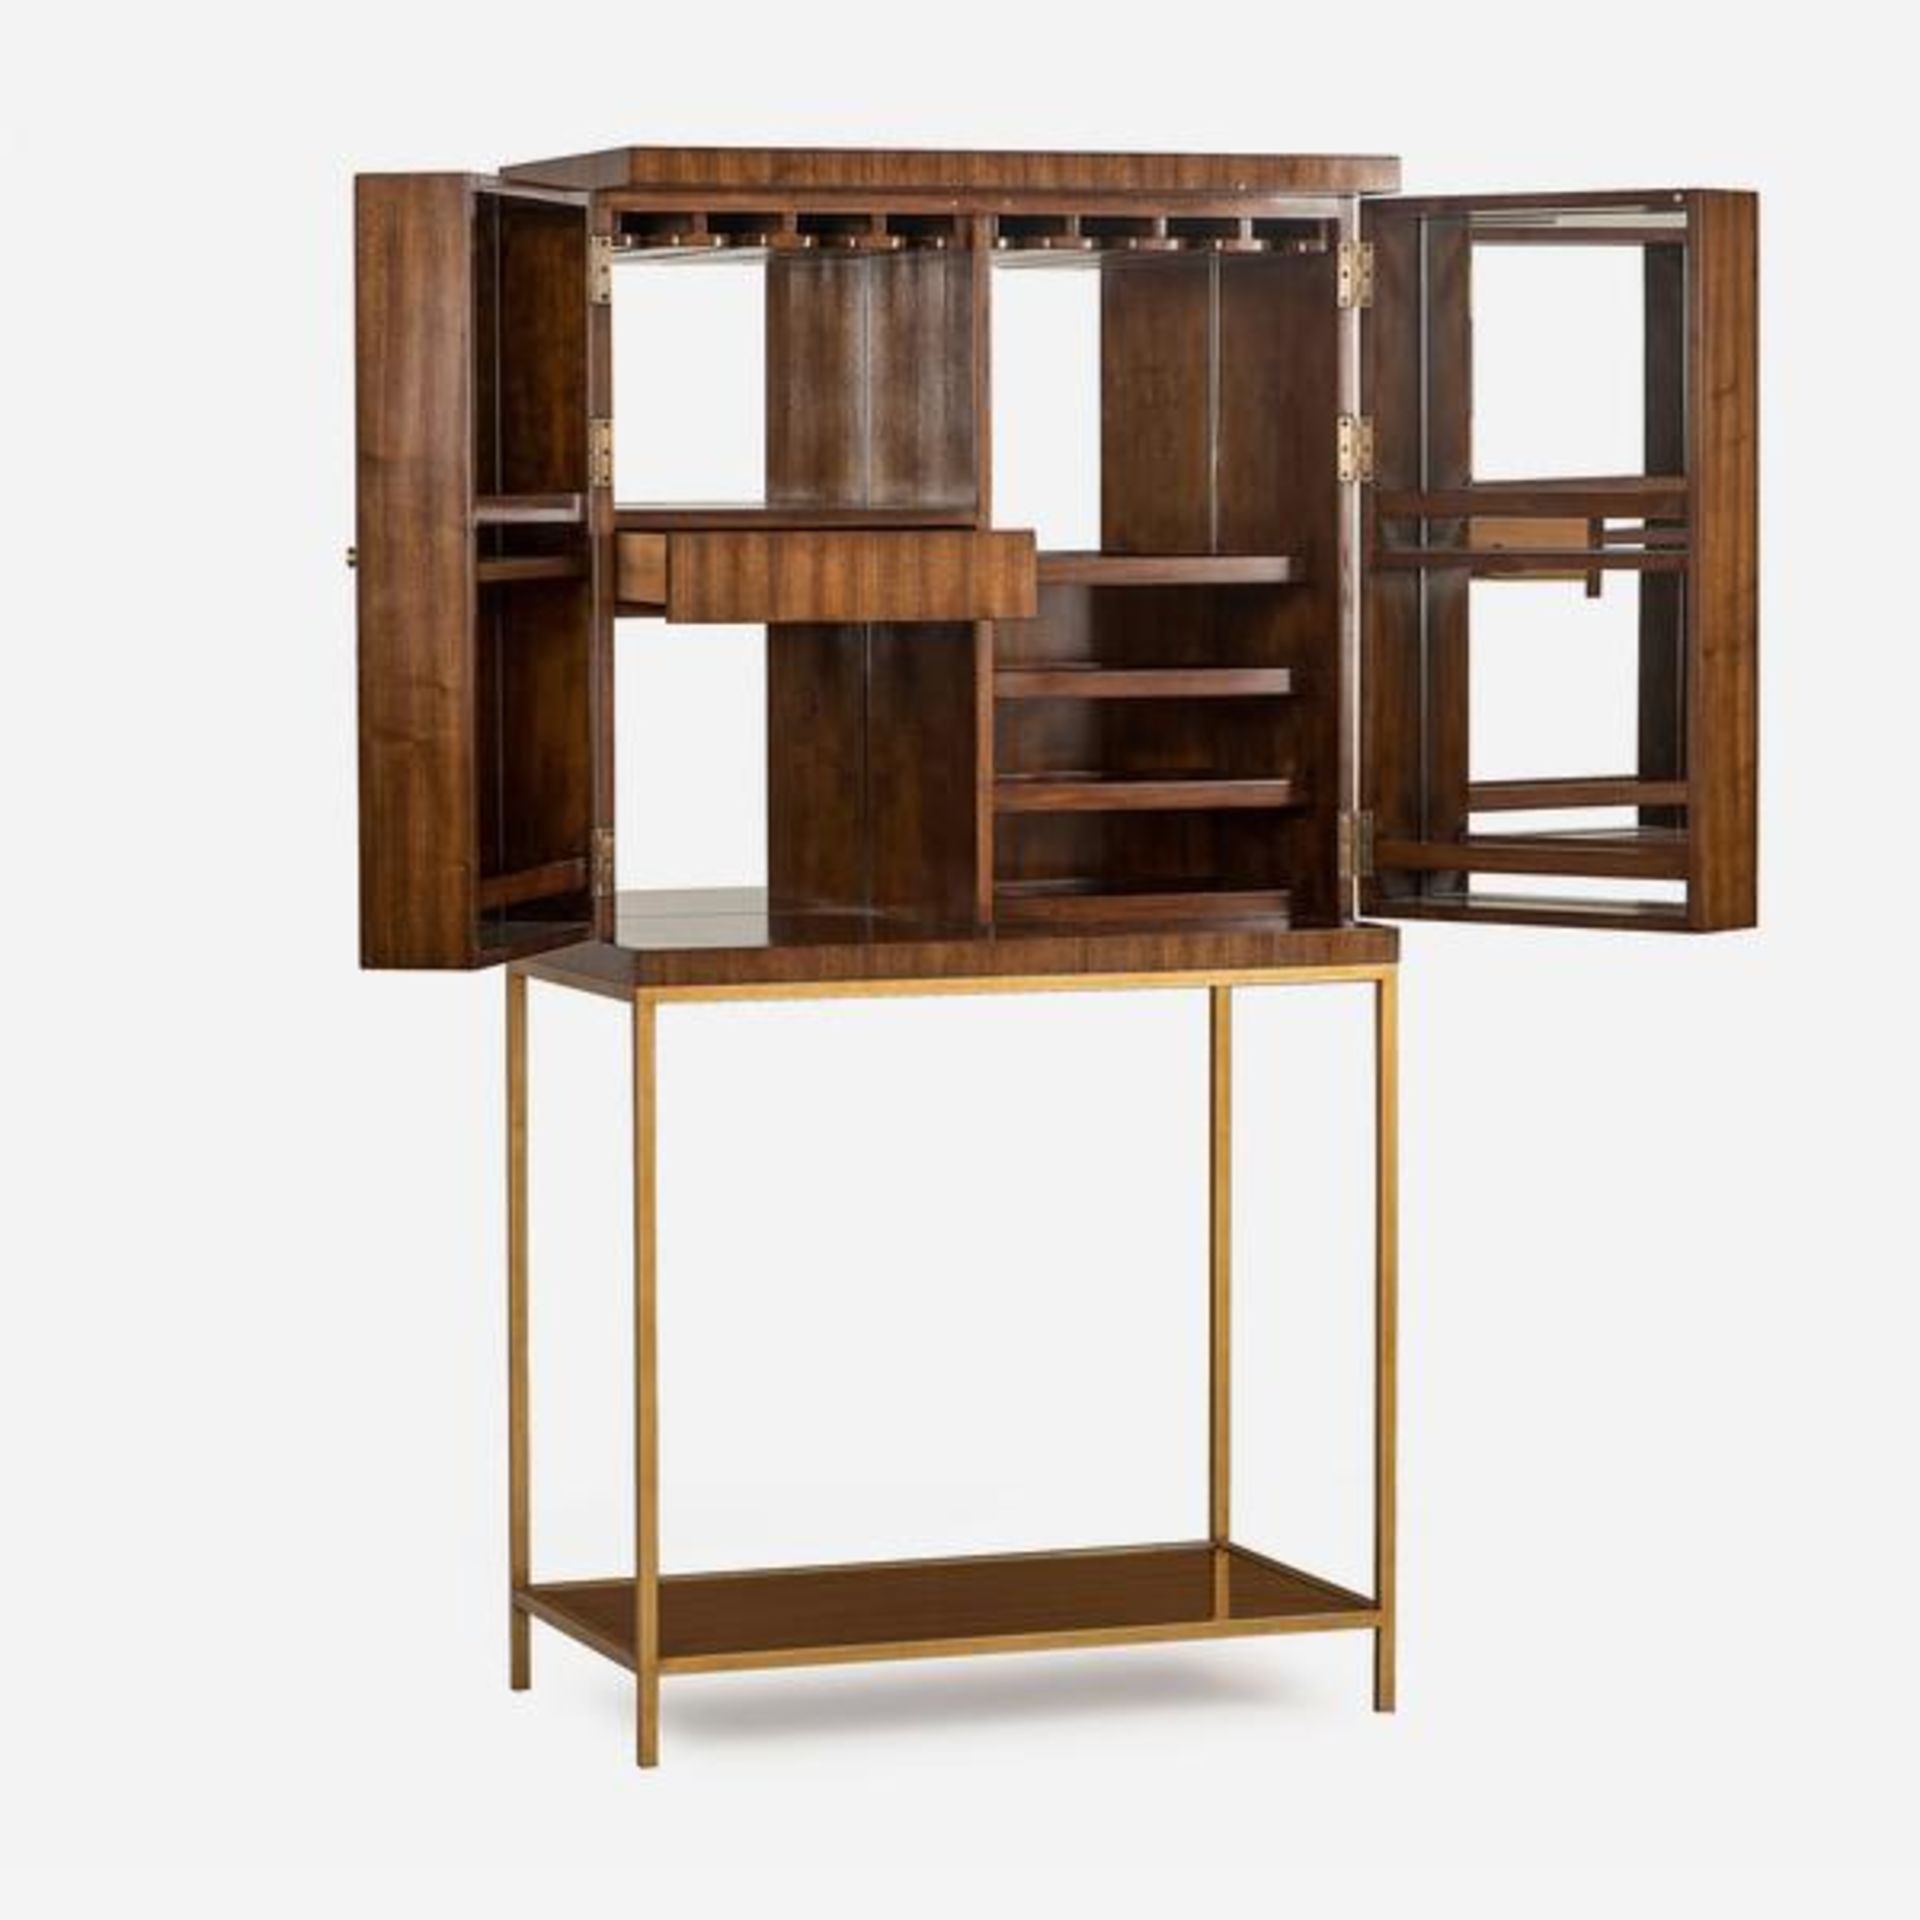 Copeland Bar Cabinet The Copeland Bar Epitomizes The Mid-Century Modern Design Aesthetic,